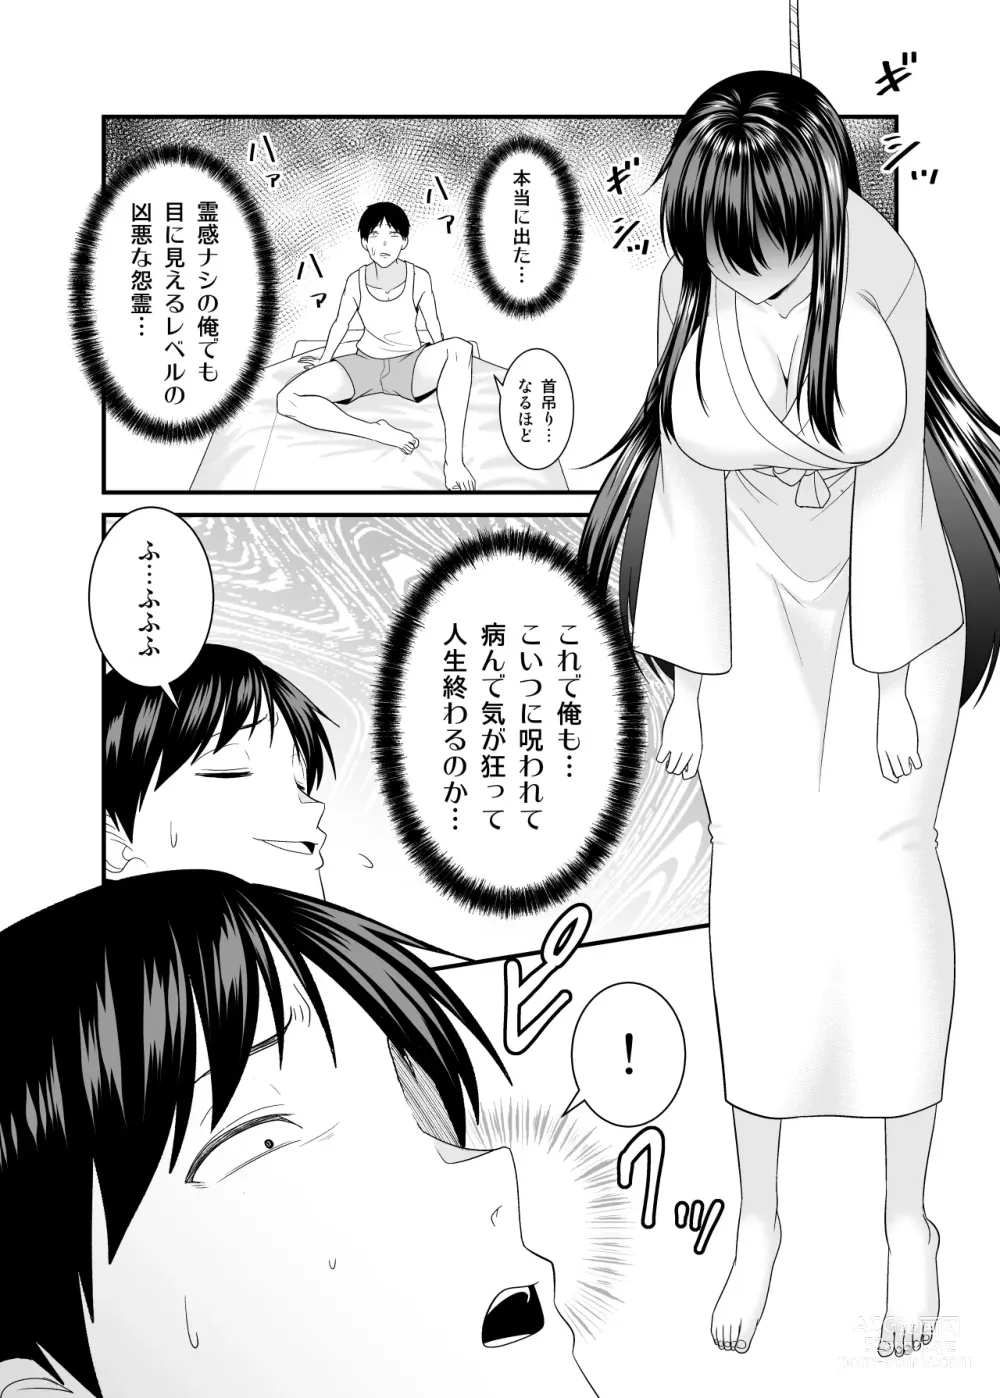 Page 9 of doujinshi ヤバい事故物件に女幽霊が出たけど無職底辺の俺はセックスしまくる